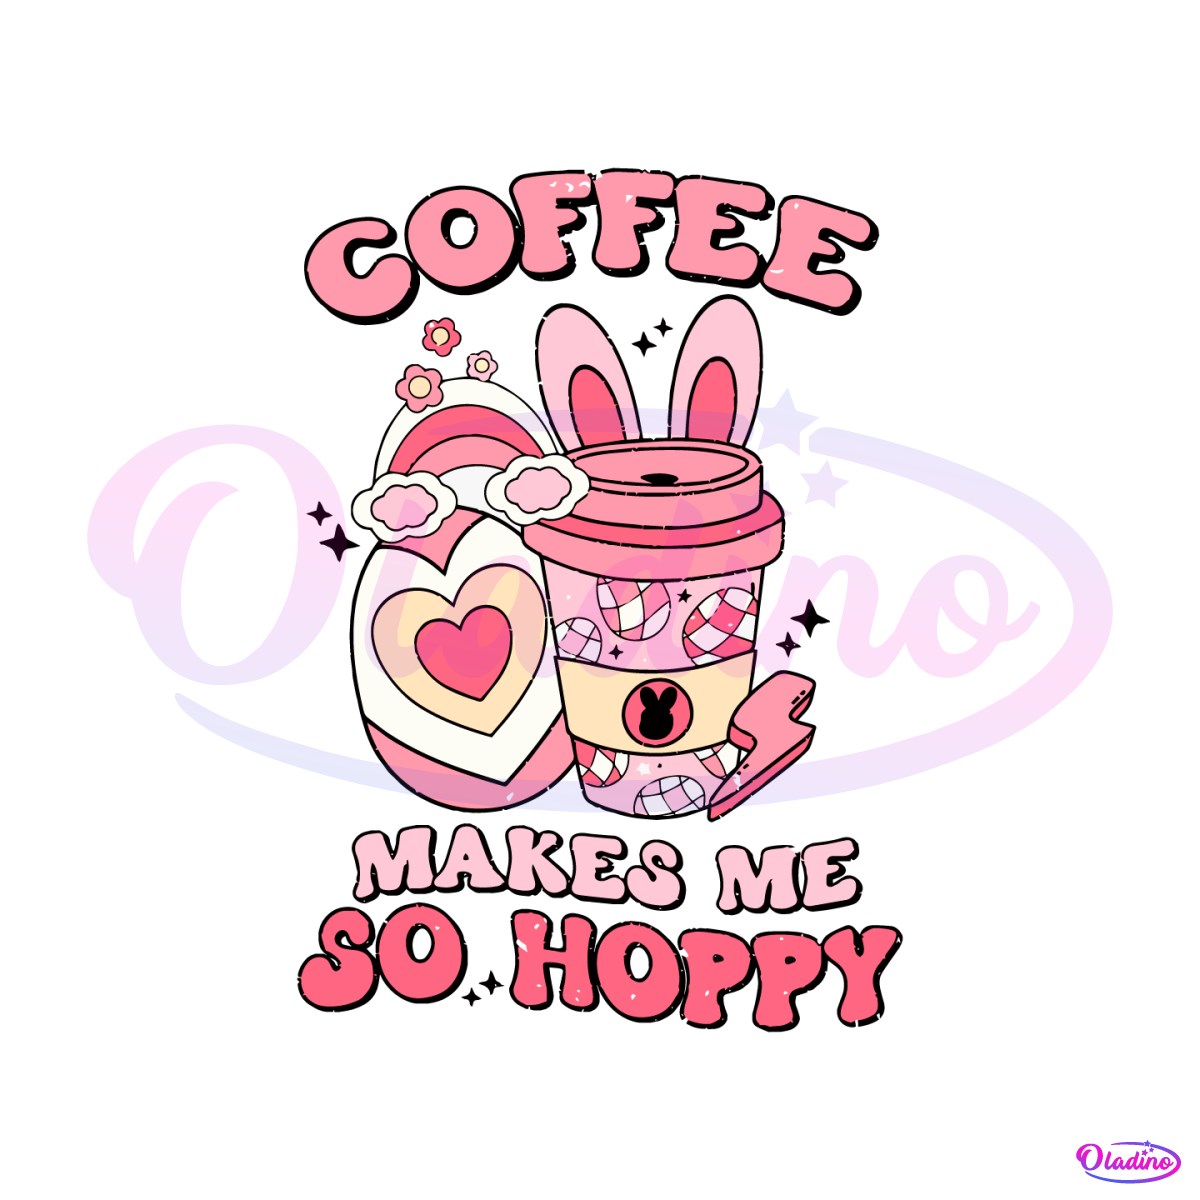 coffee-makes-me-so-happy-svg